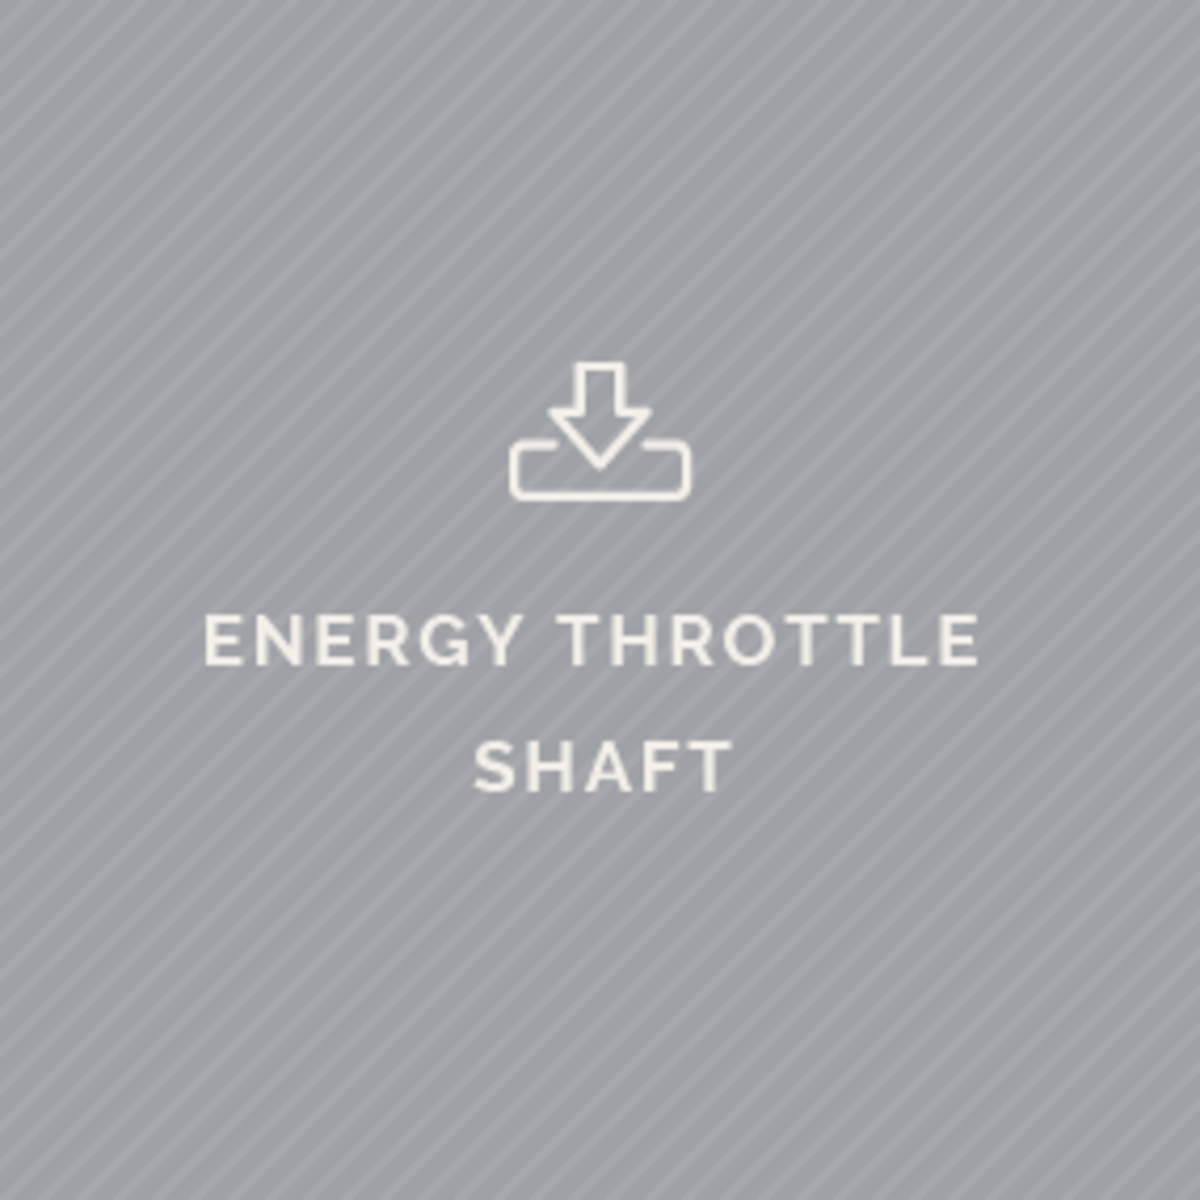 drawings Energy throttle shaft